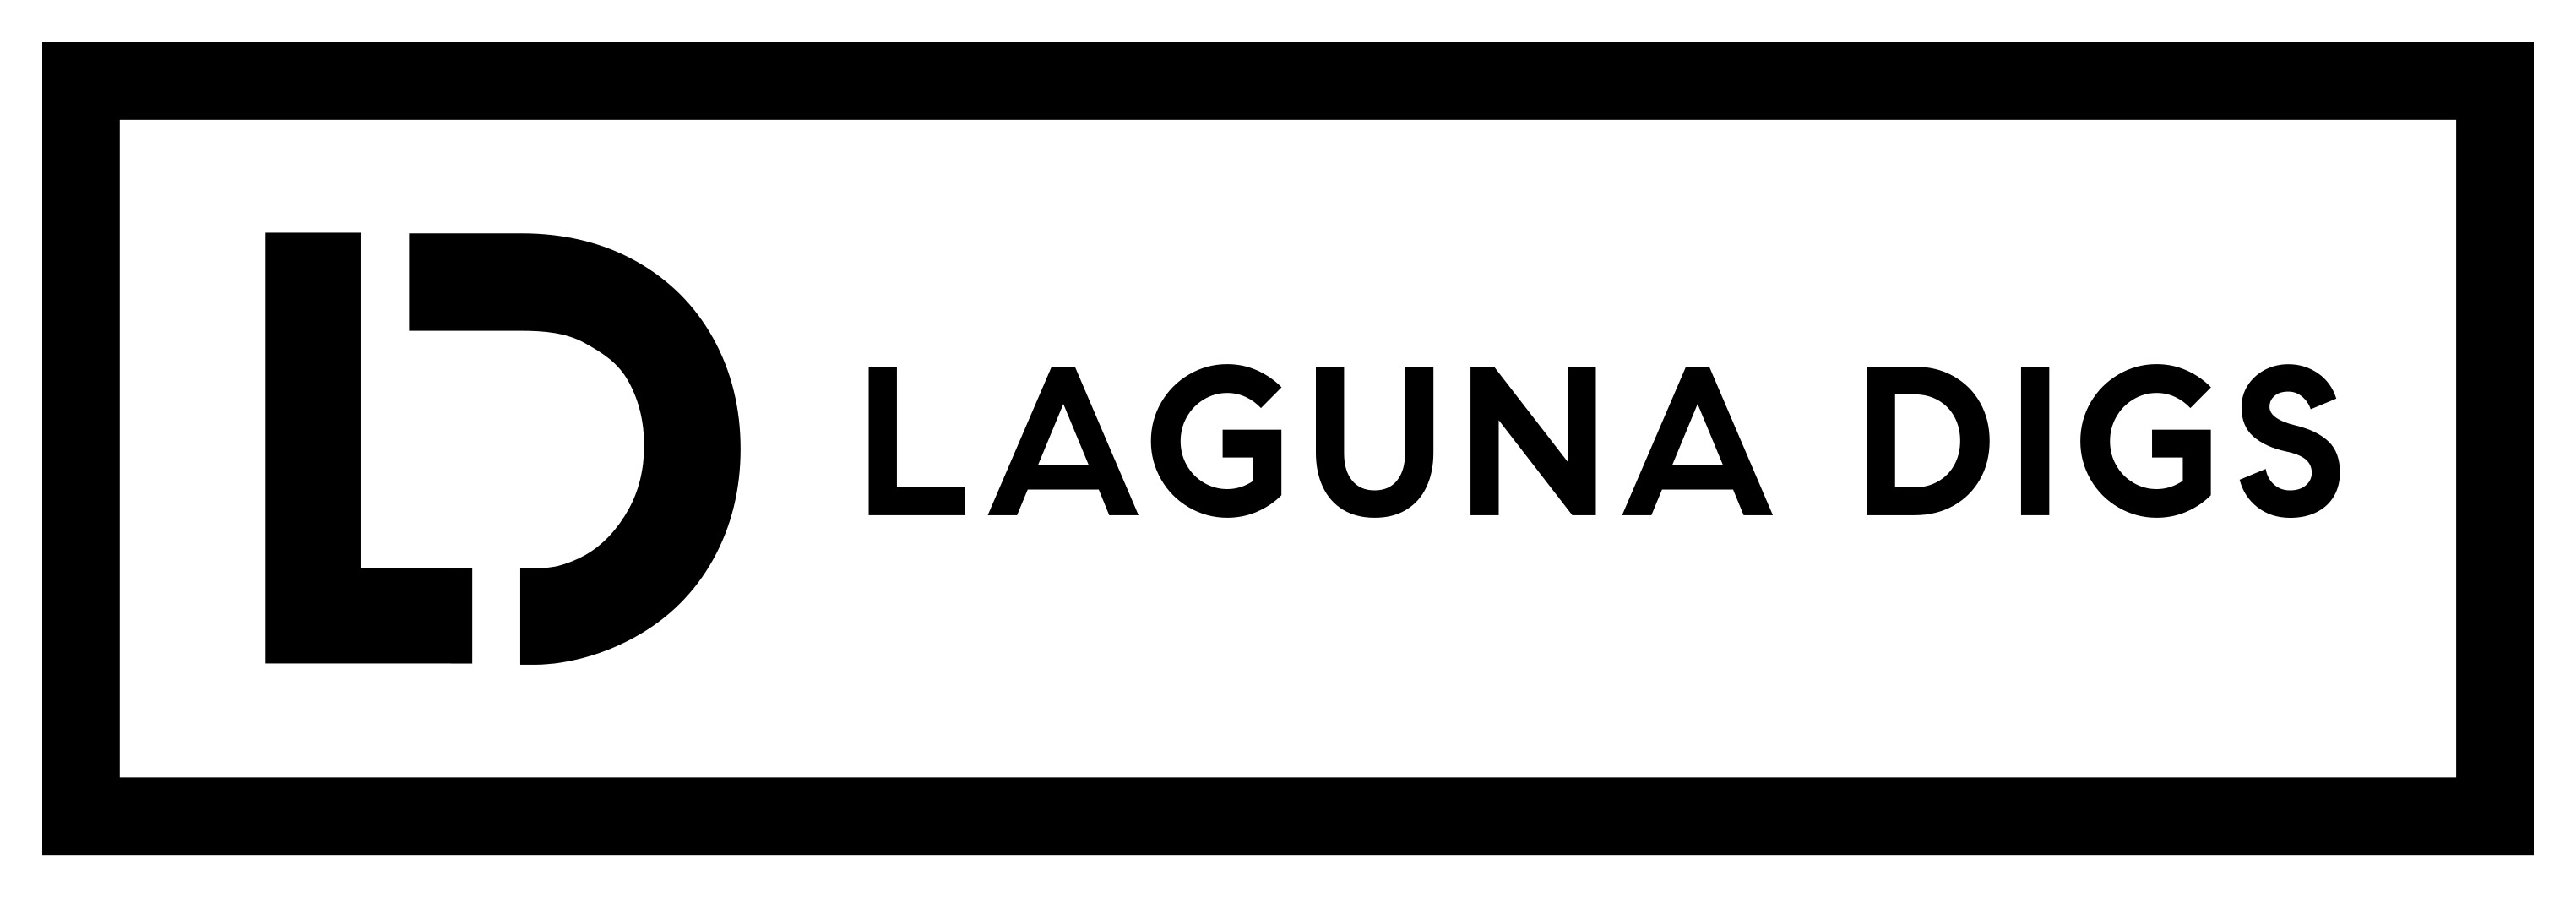 A text banner for Laguna Digs